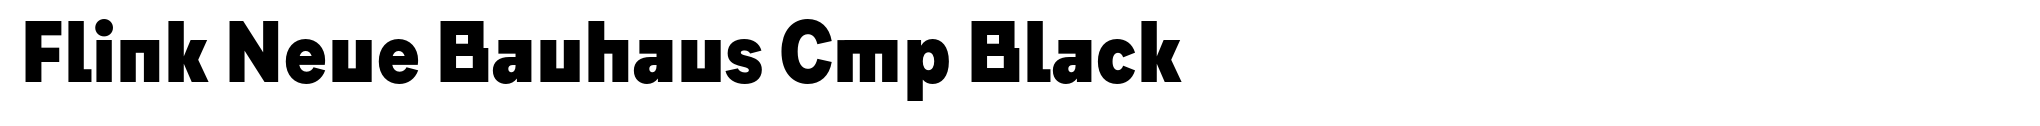 Flink Neue Bauhaus Cmp Black image